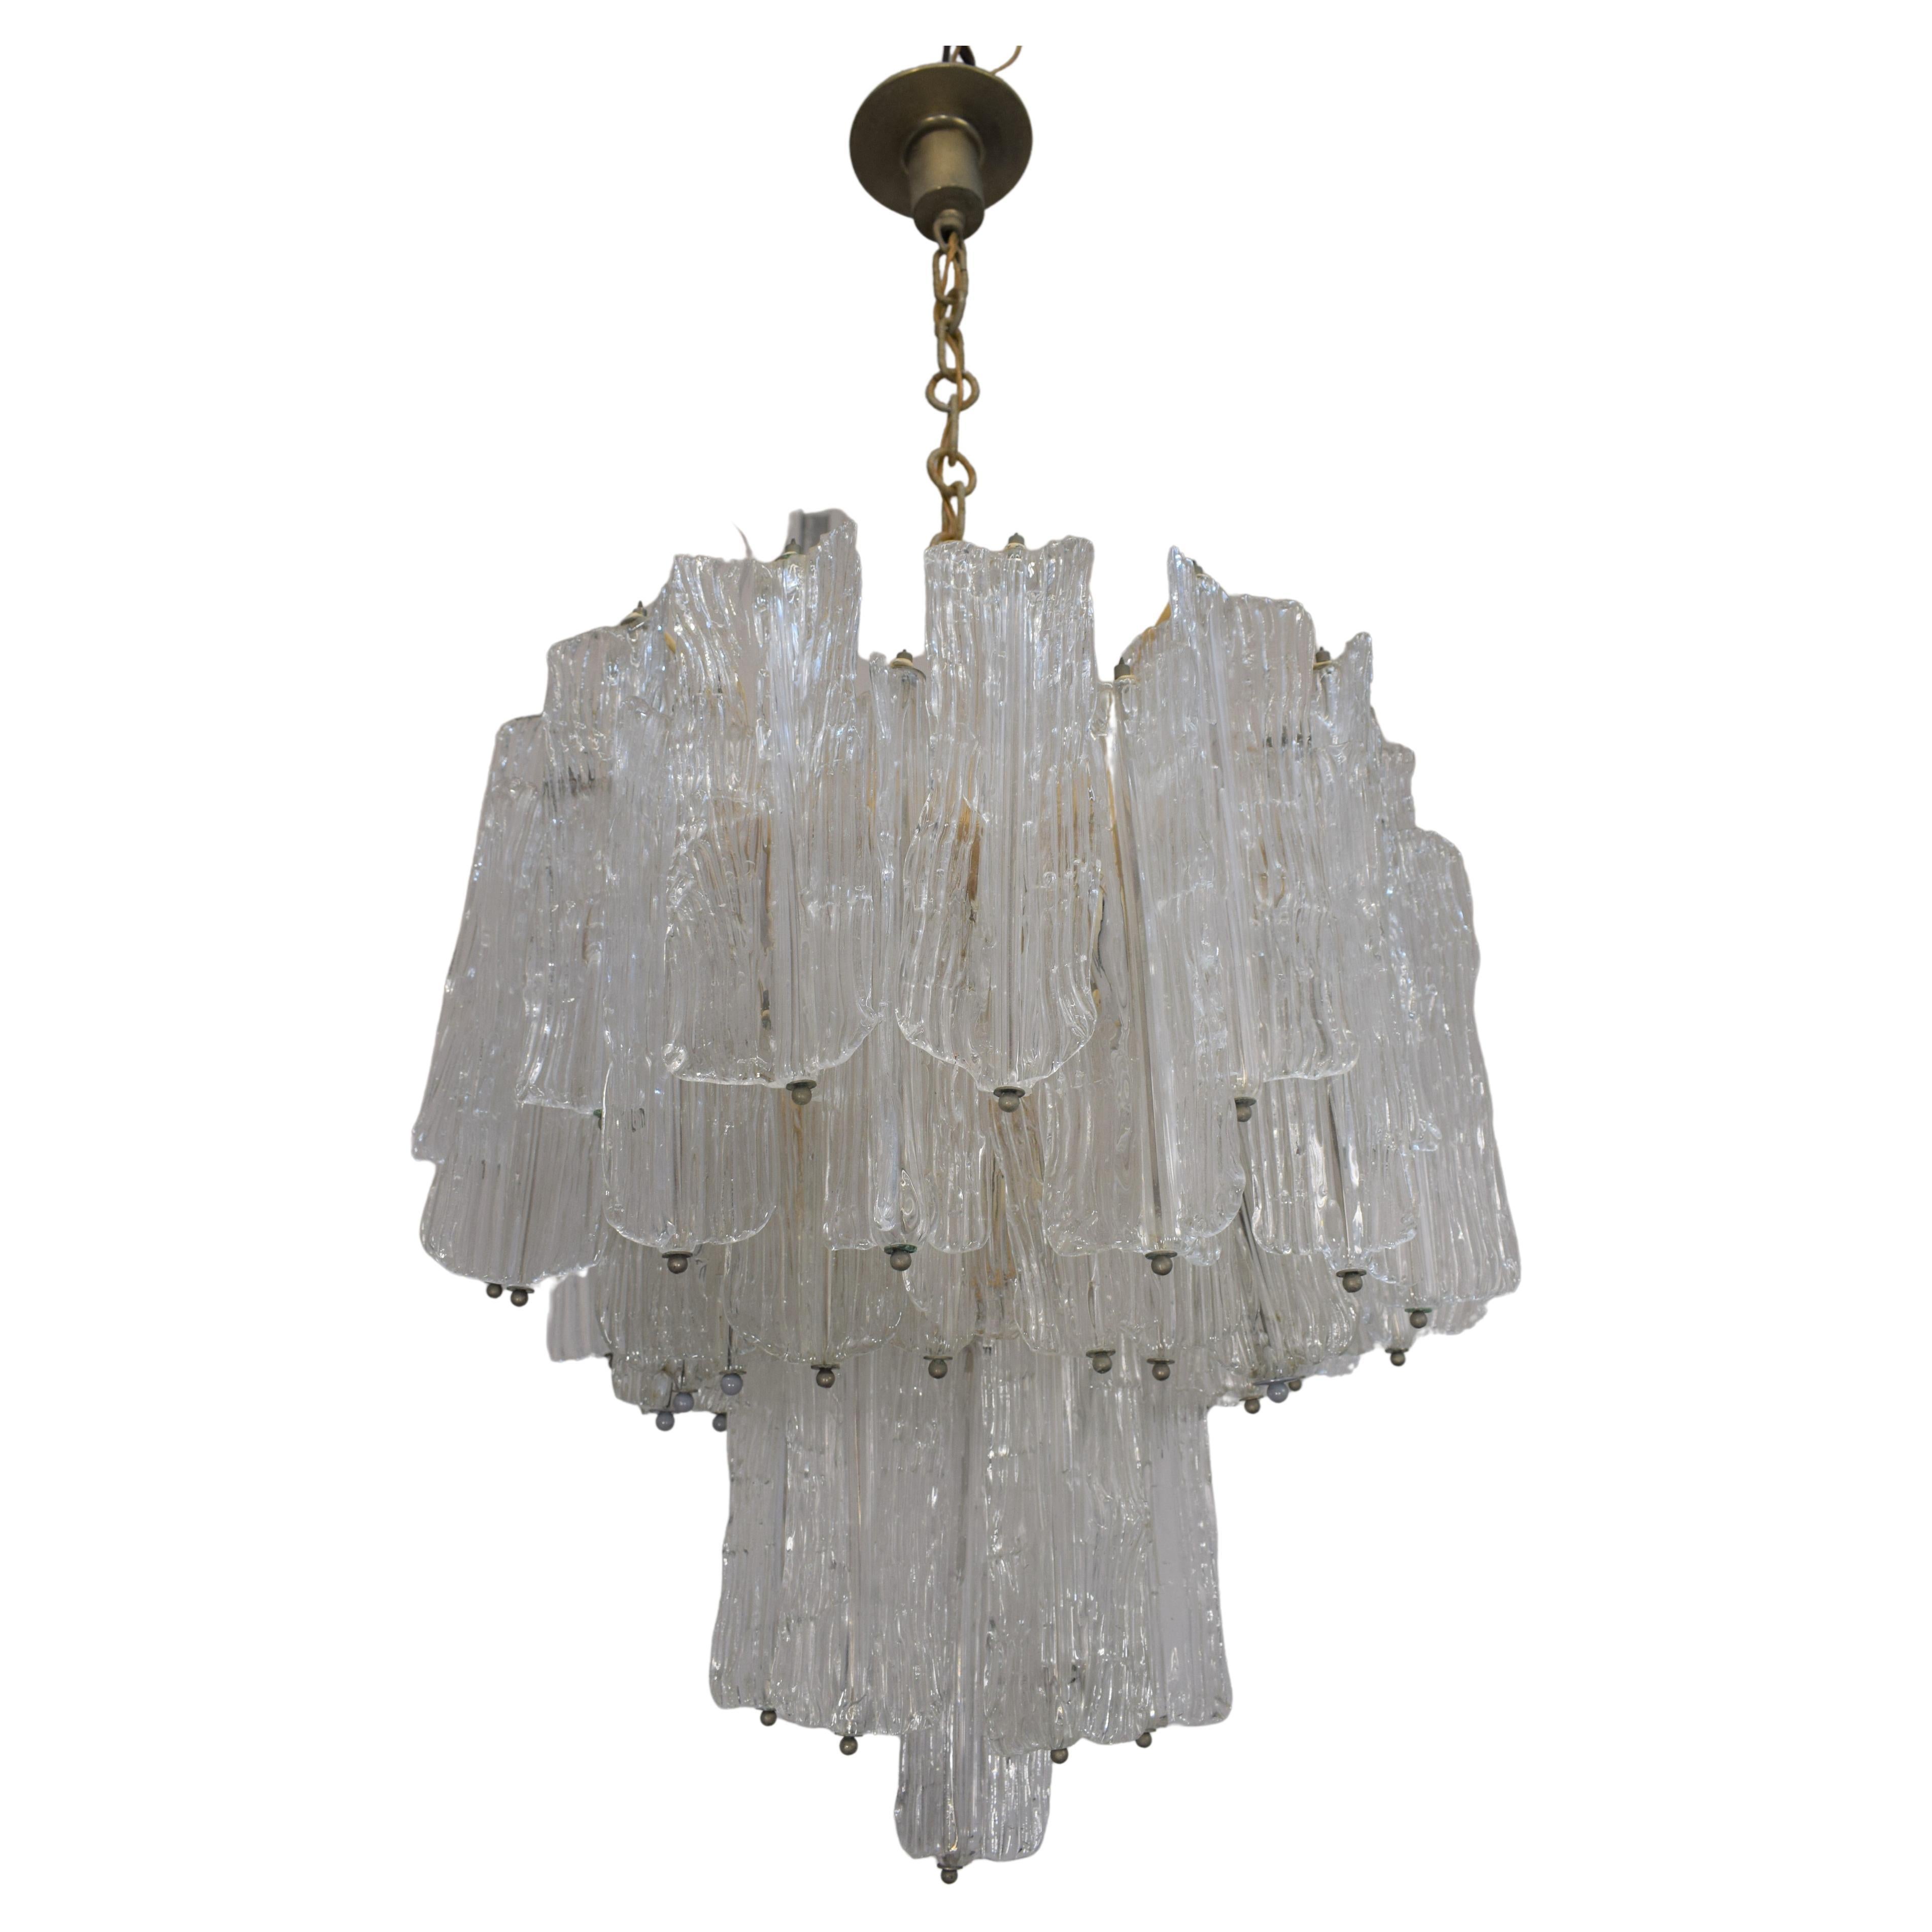 Italian chandelier by Toni Zuccheri for Venini Murano, 1960s.